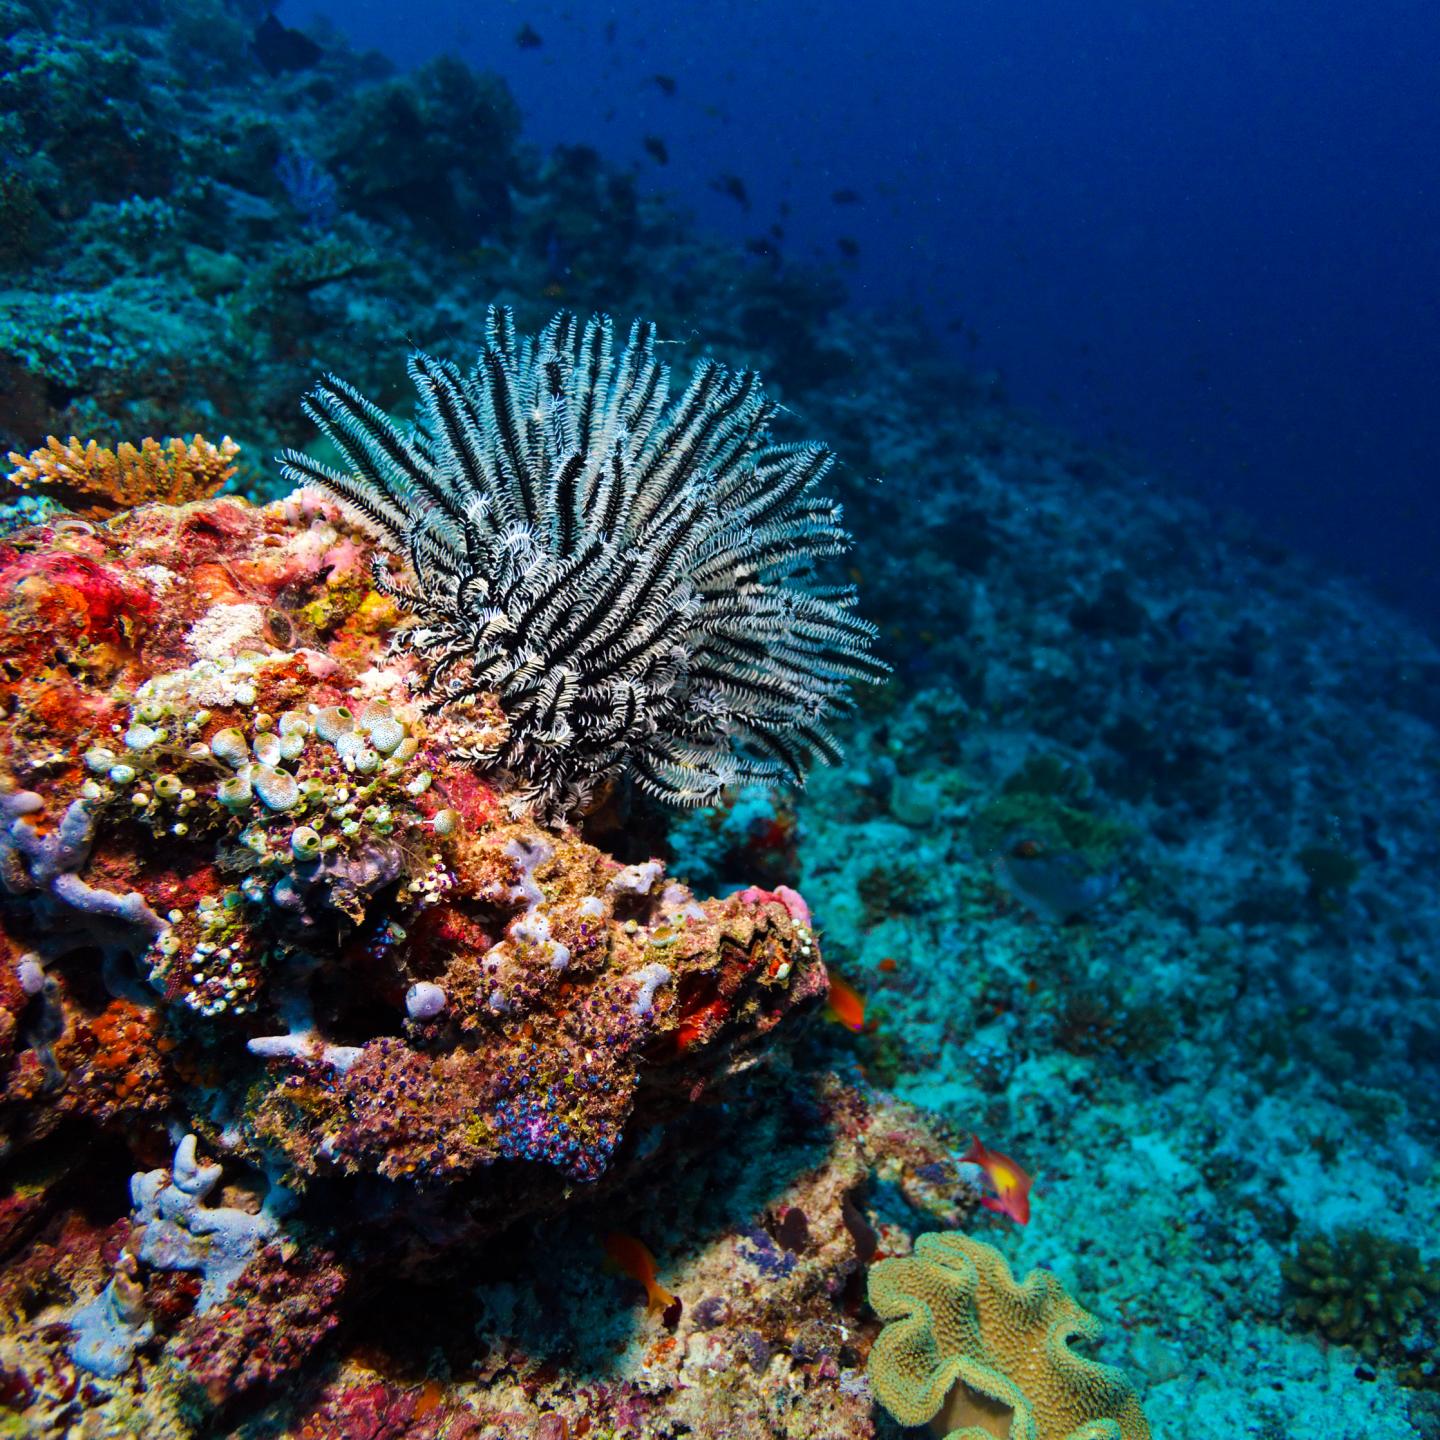 ocean acidification effects on marine life